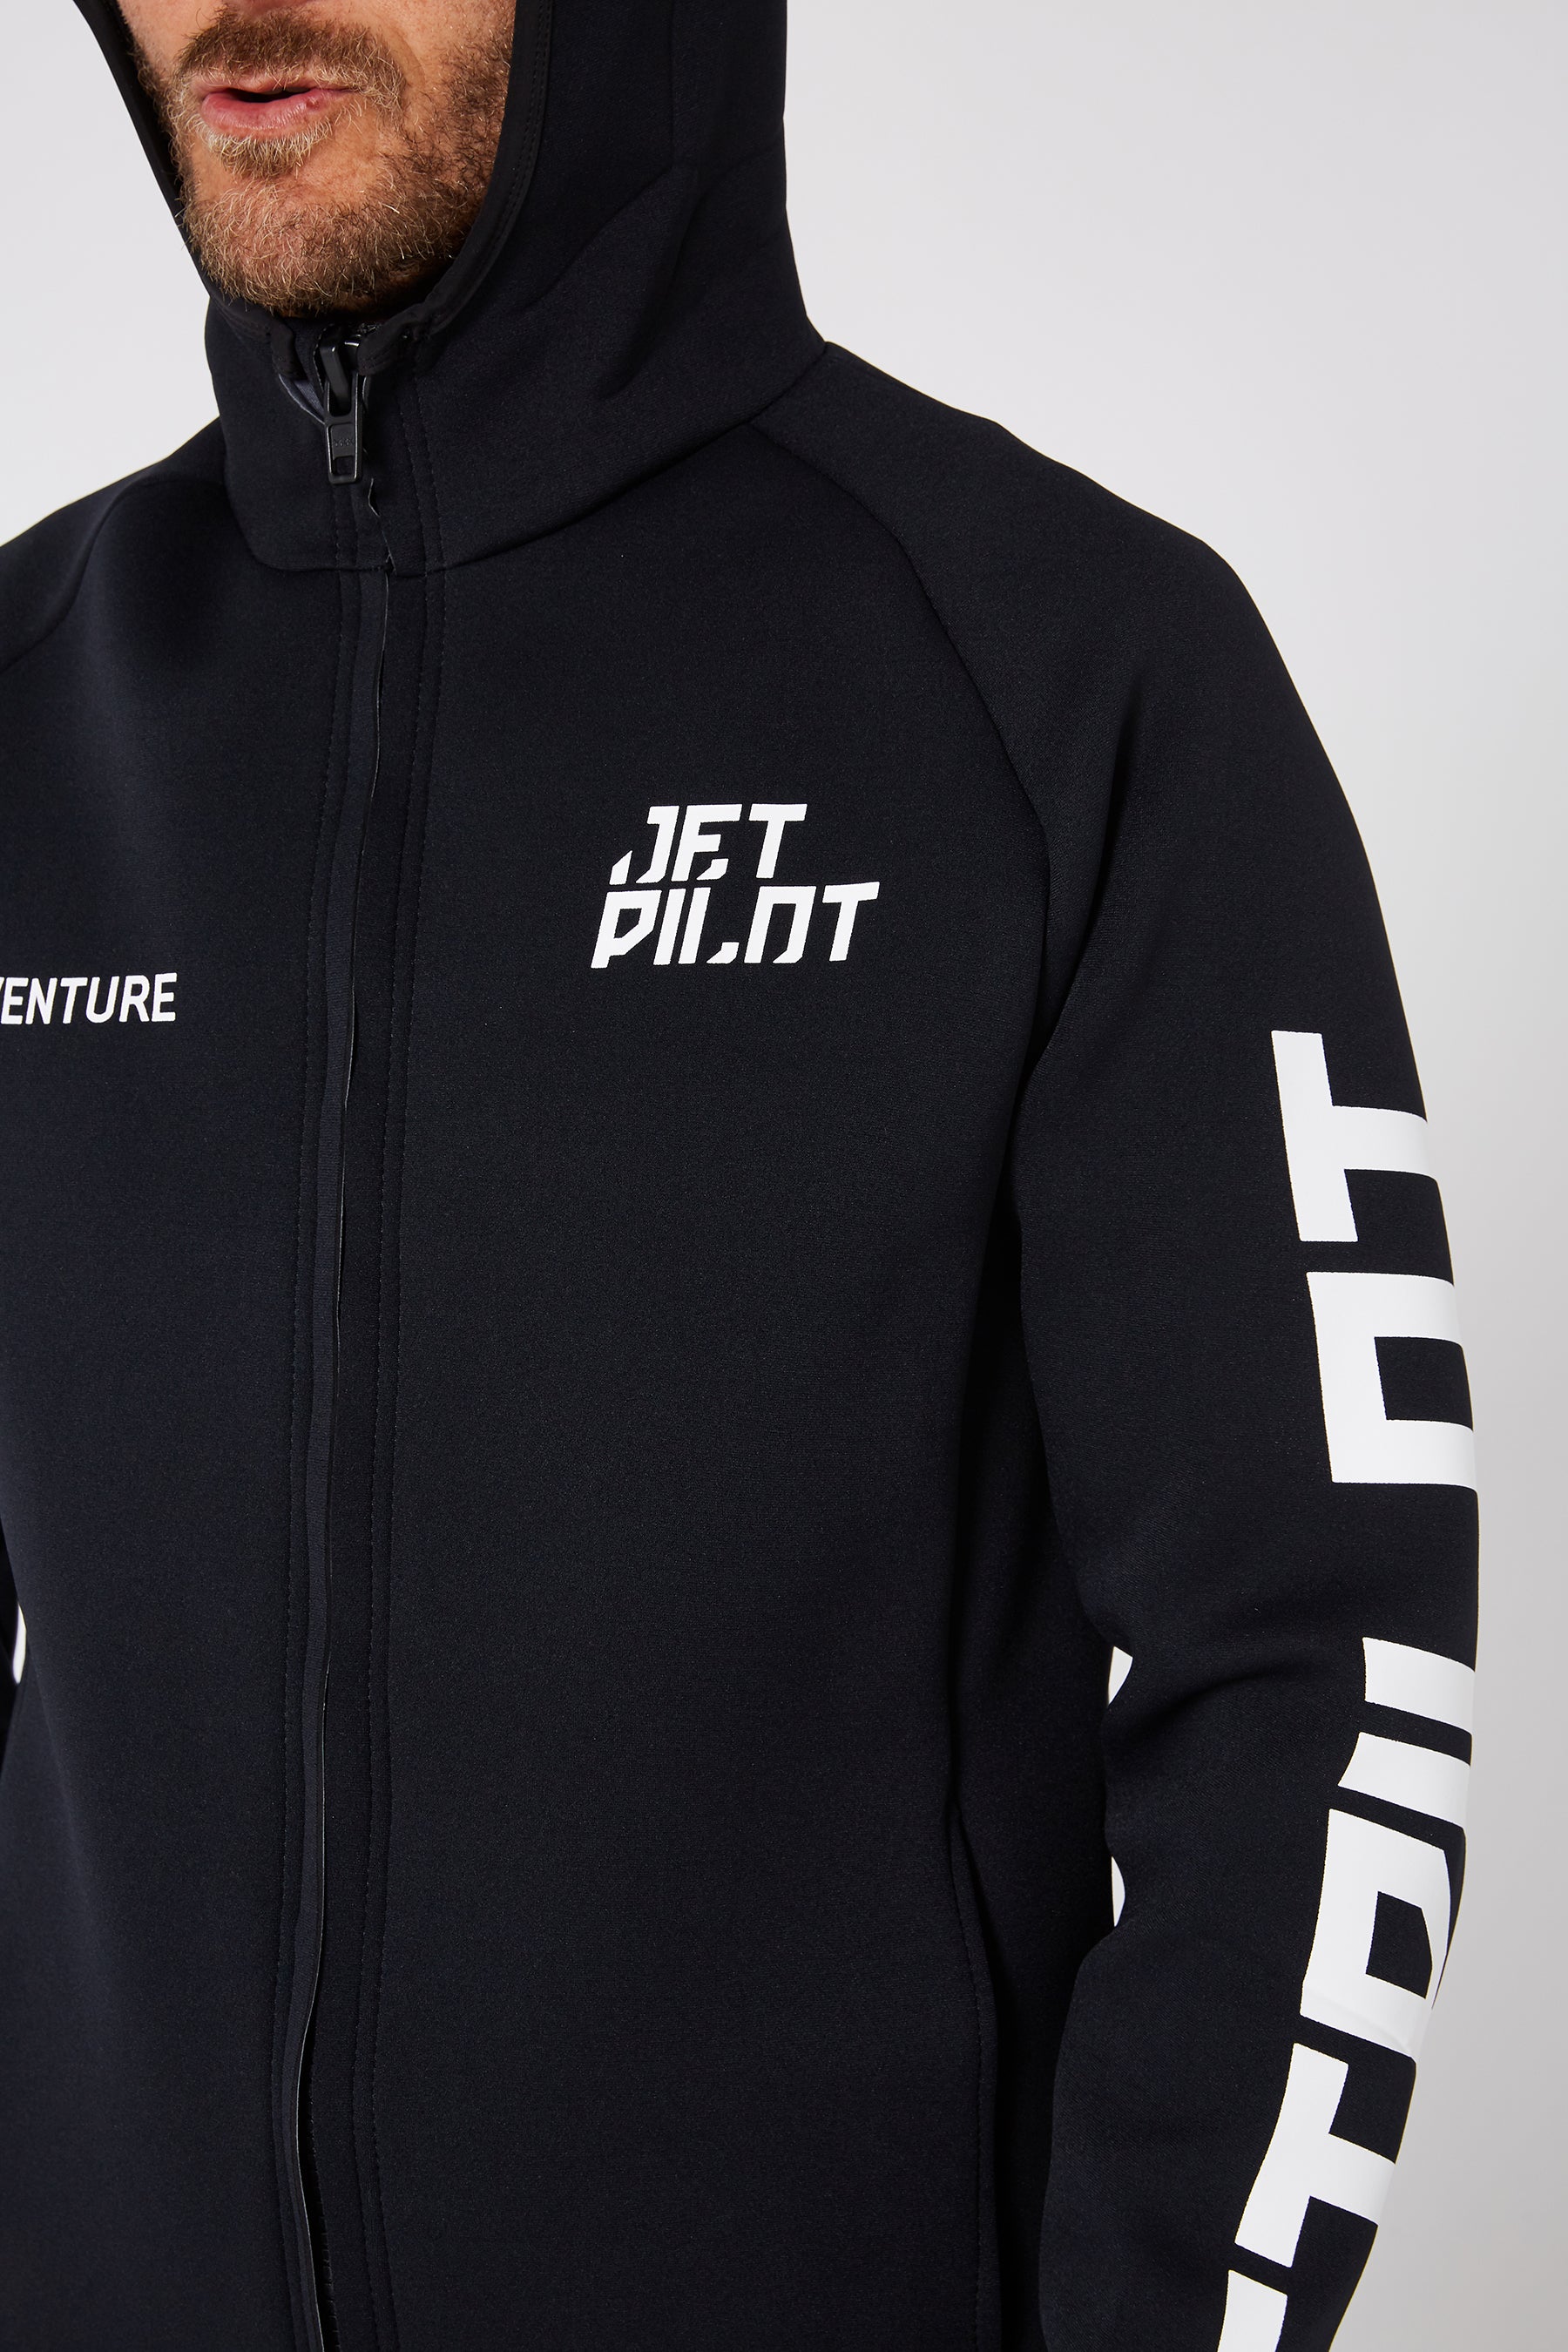 Jetpilot Venture Mens Long Tour Coat - Black